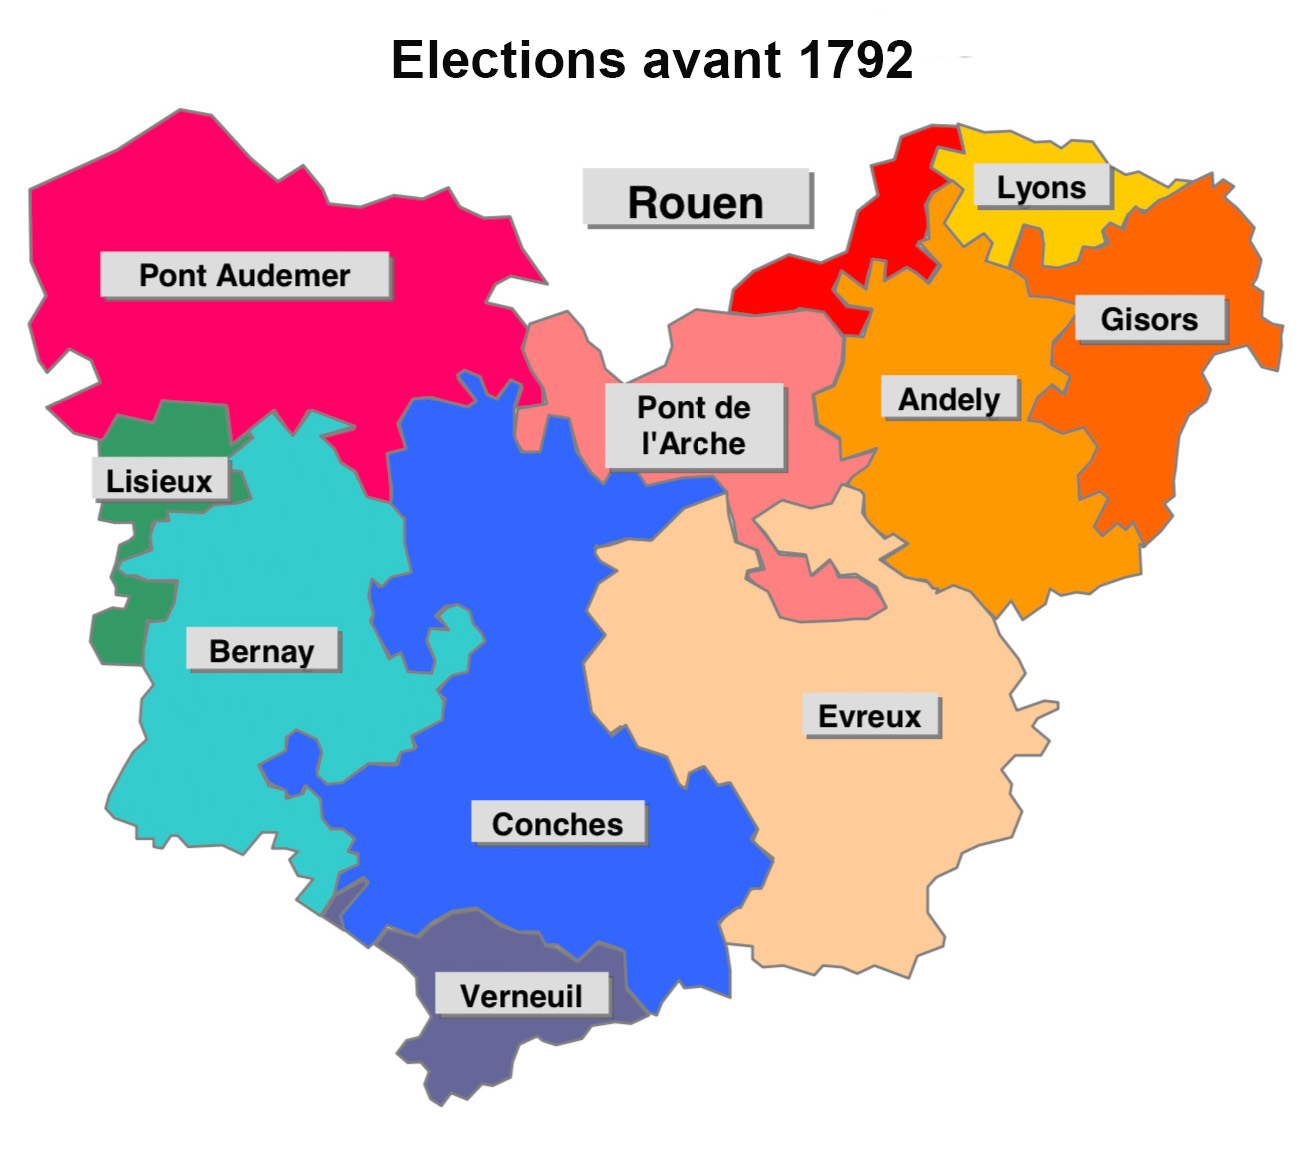 Elections avant 1792